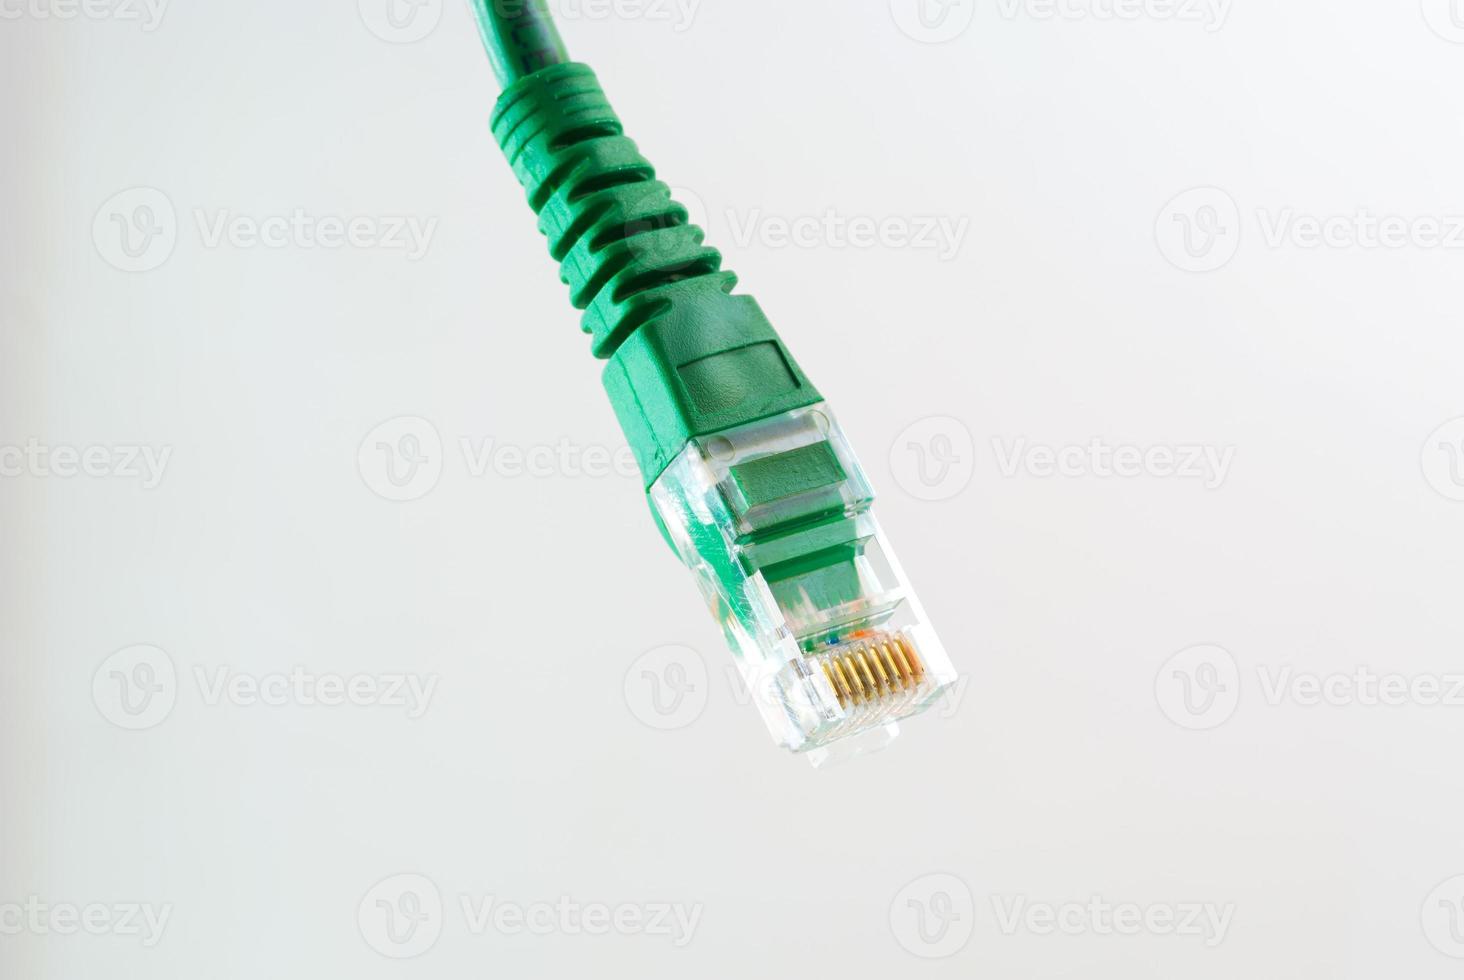 Cable de red rj45 cabeza sobre fondo blanco. foto